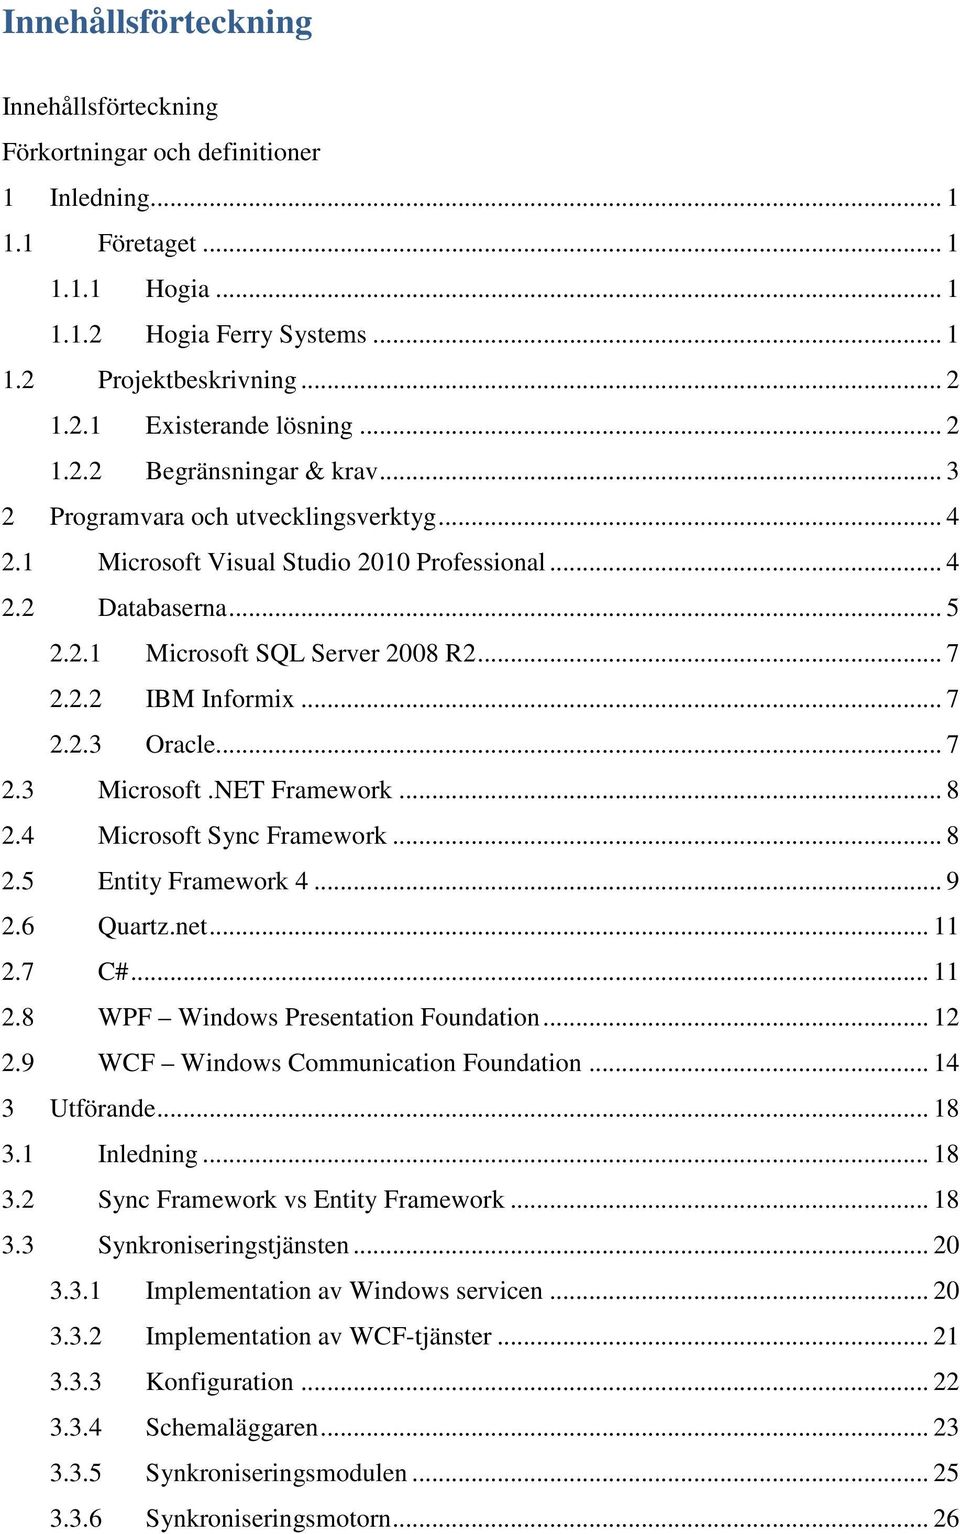 .. 7 2.2.3 Oracle... 7 2.3 Microsoft.NET Framework... 8 2.4 Microsoft Sync Framework... 8 2.5 Entity Framework 4... 9 2.6 Quartz.net... 11 2.7 C#... 11 2.8 WPF Windows Presentation Foundation... 12 2.